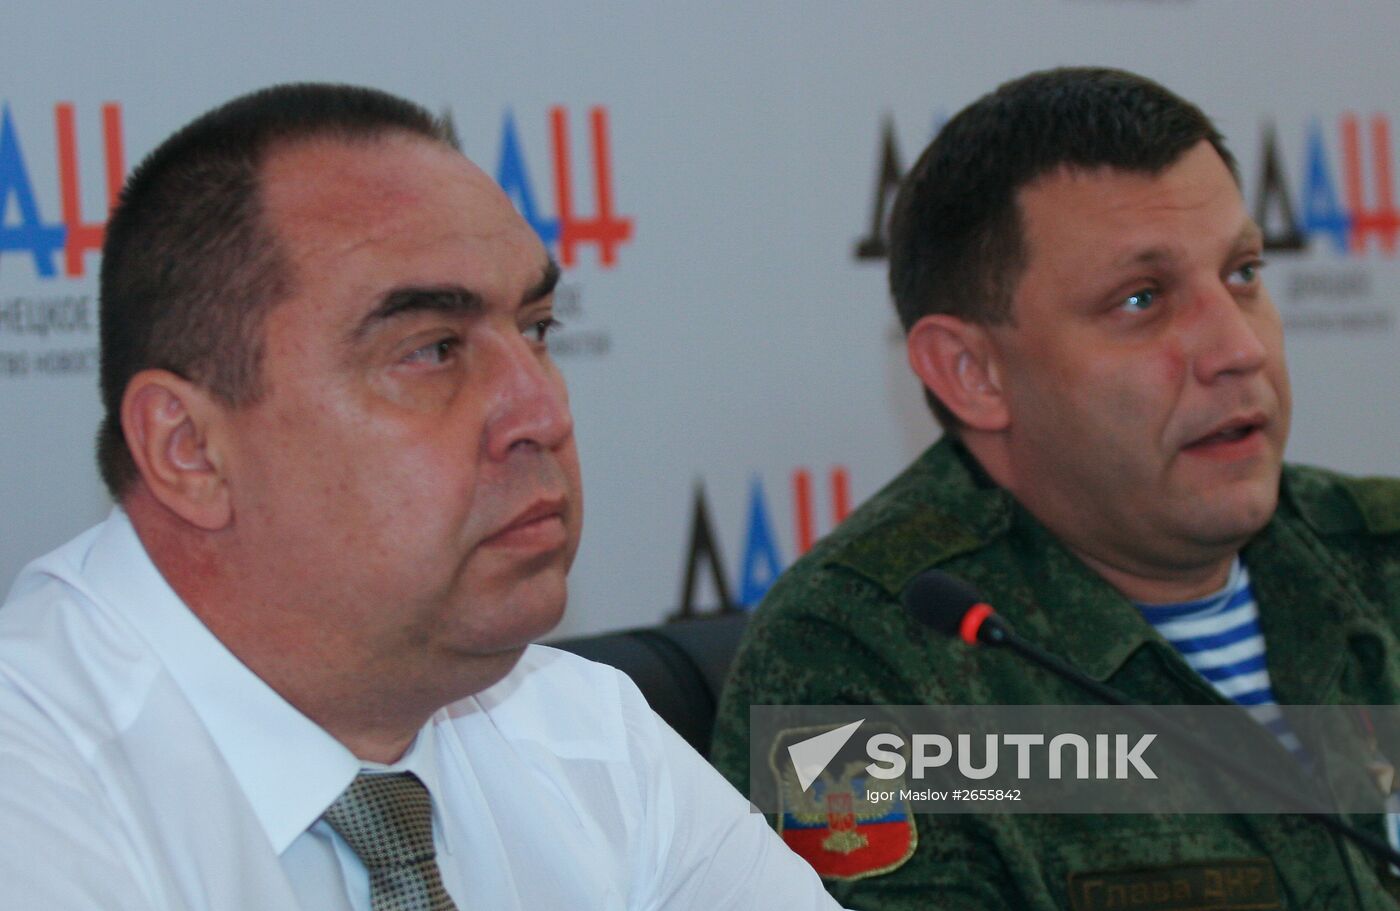 Joint briefing of DPR Head Alexander Zakharchenko and LPR Head Igor Plotnitsky